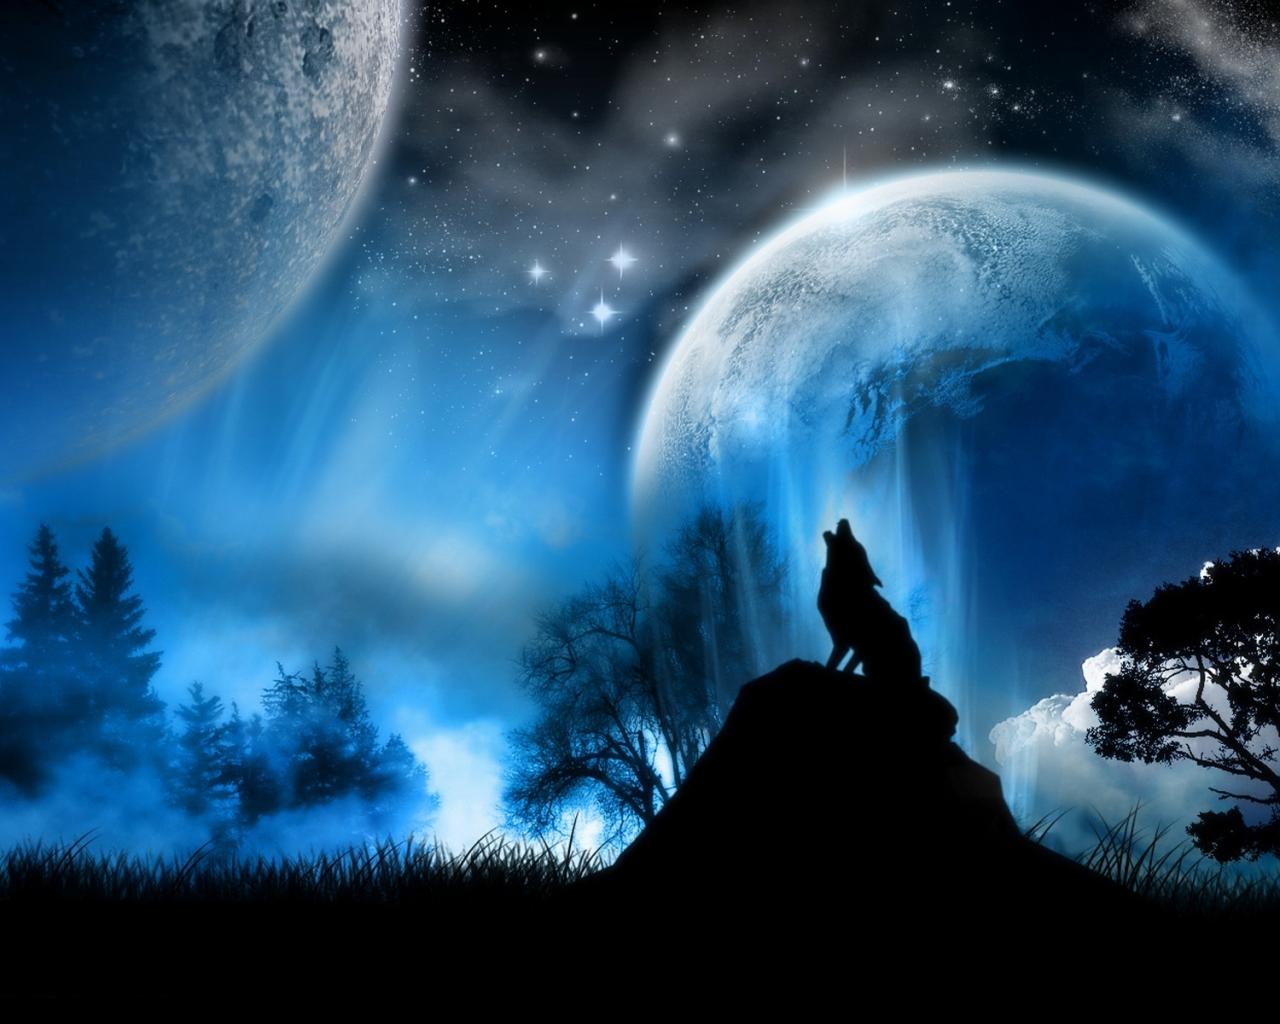 Moon Howling wolf 1280x1024 Notebook/LCD wallpaper#532